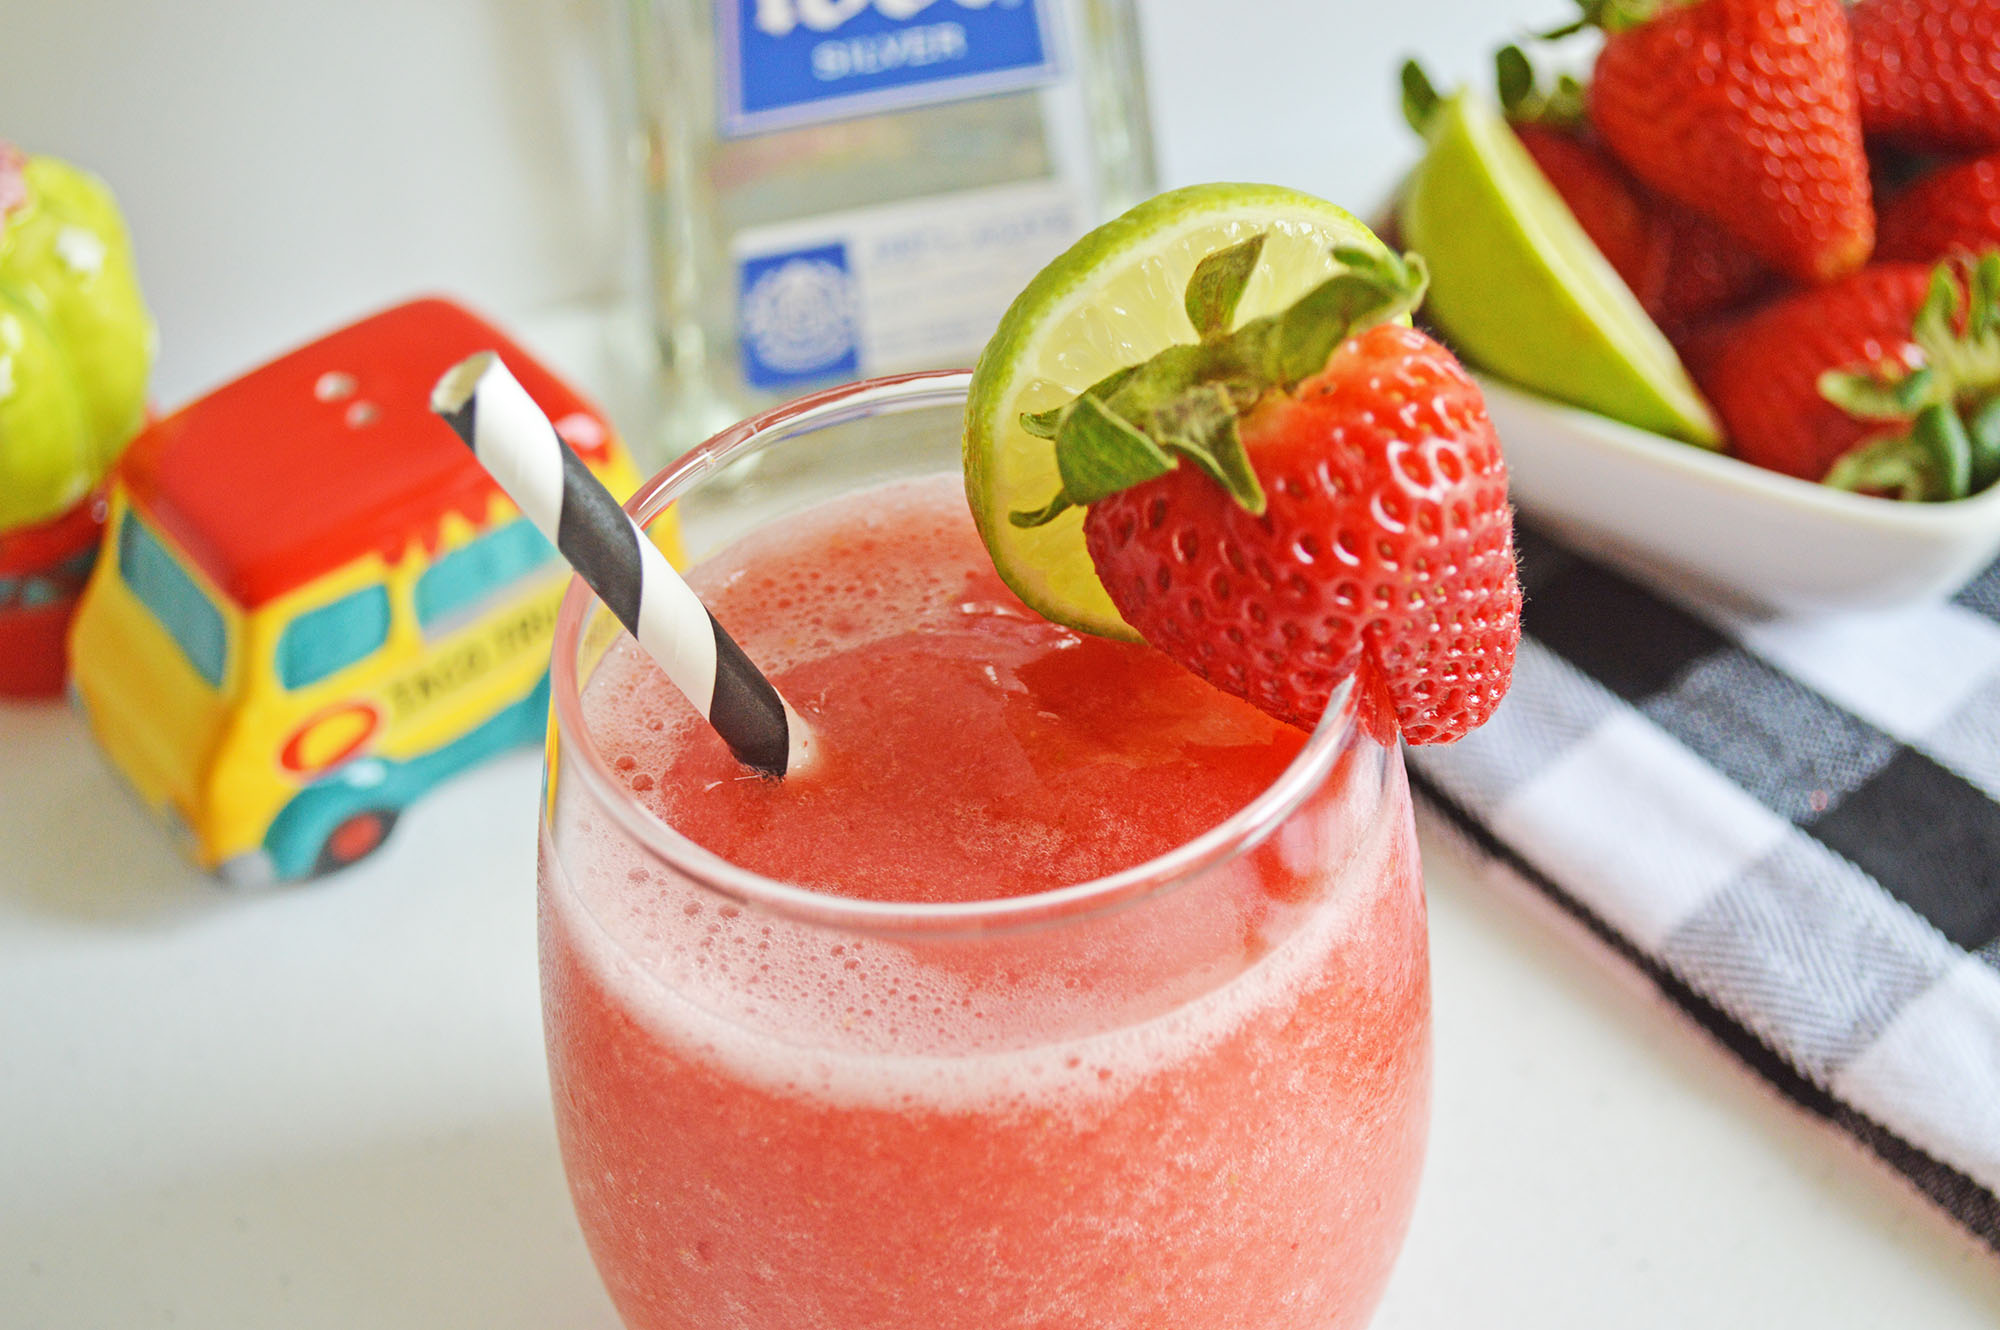 Frozen Strawberry Margarita